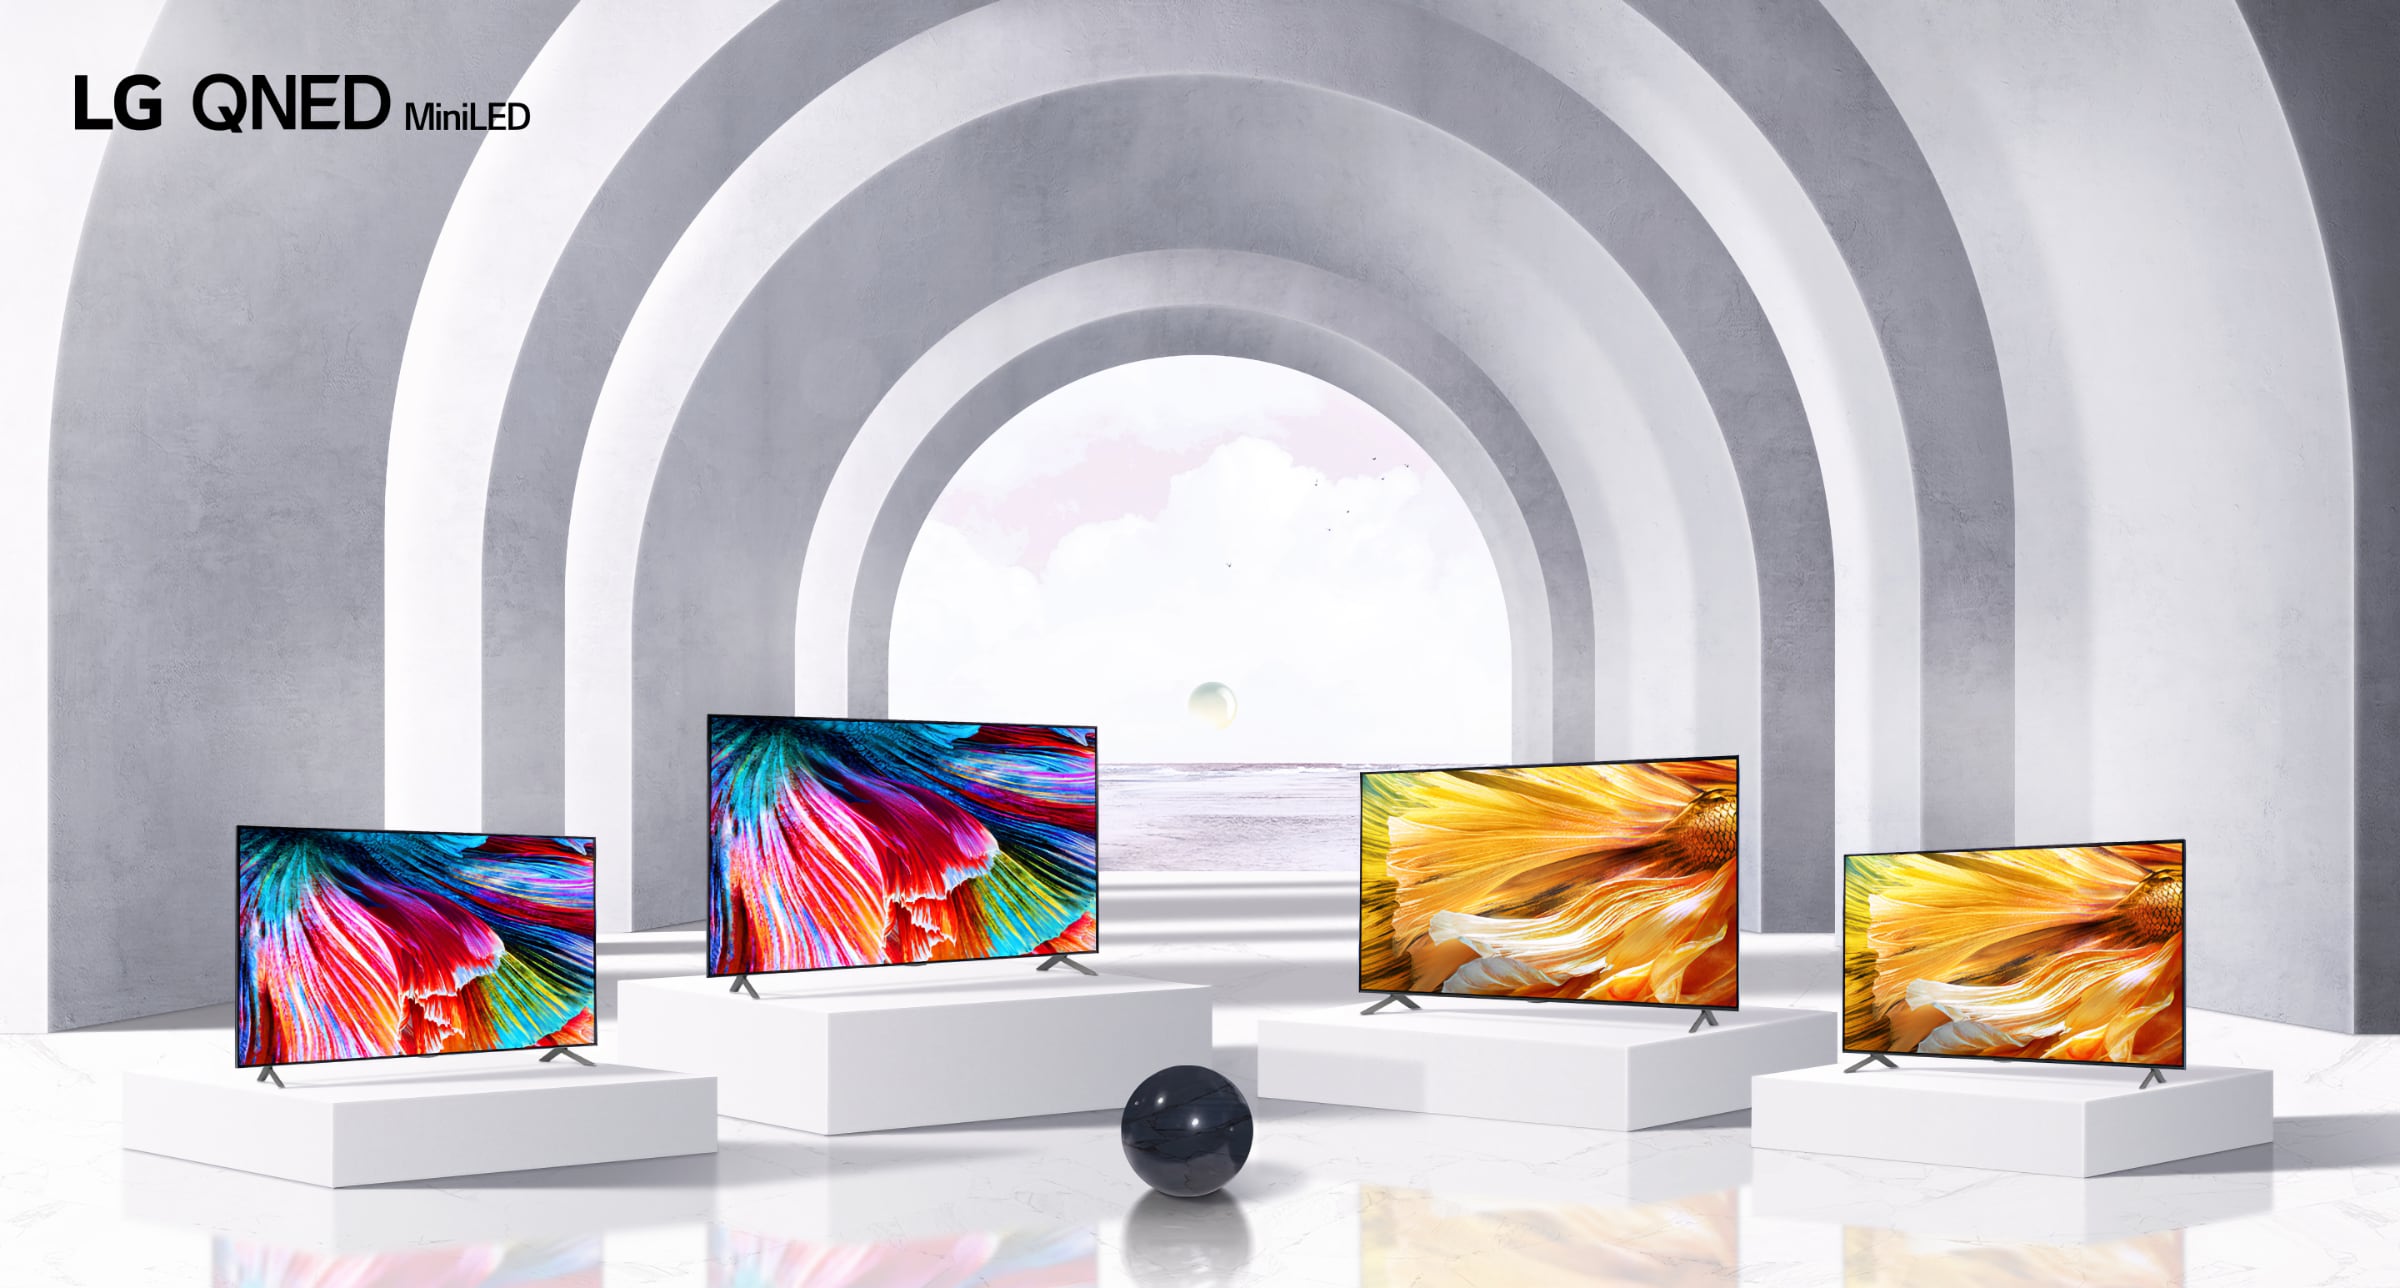 LG QNED miniLED LCD TV